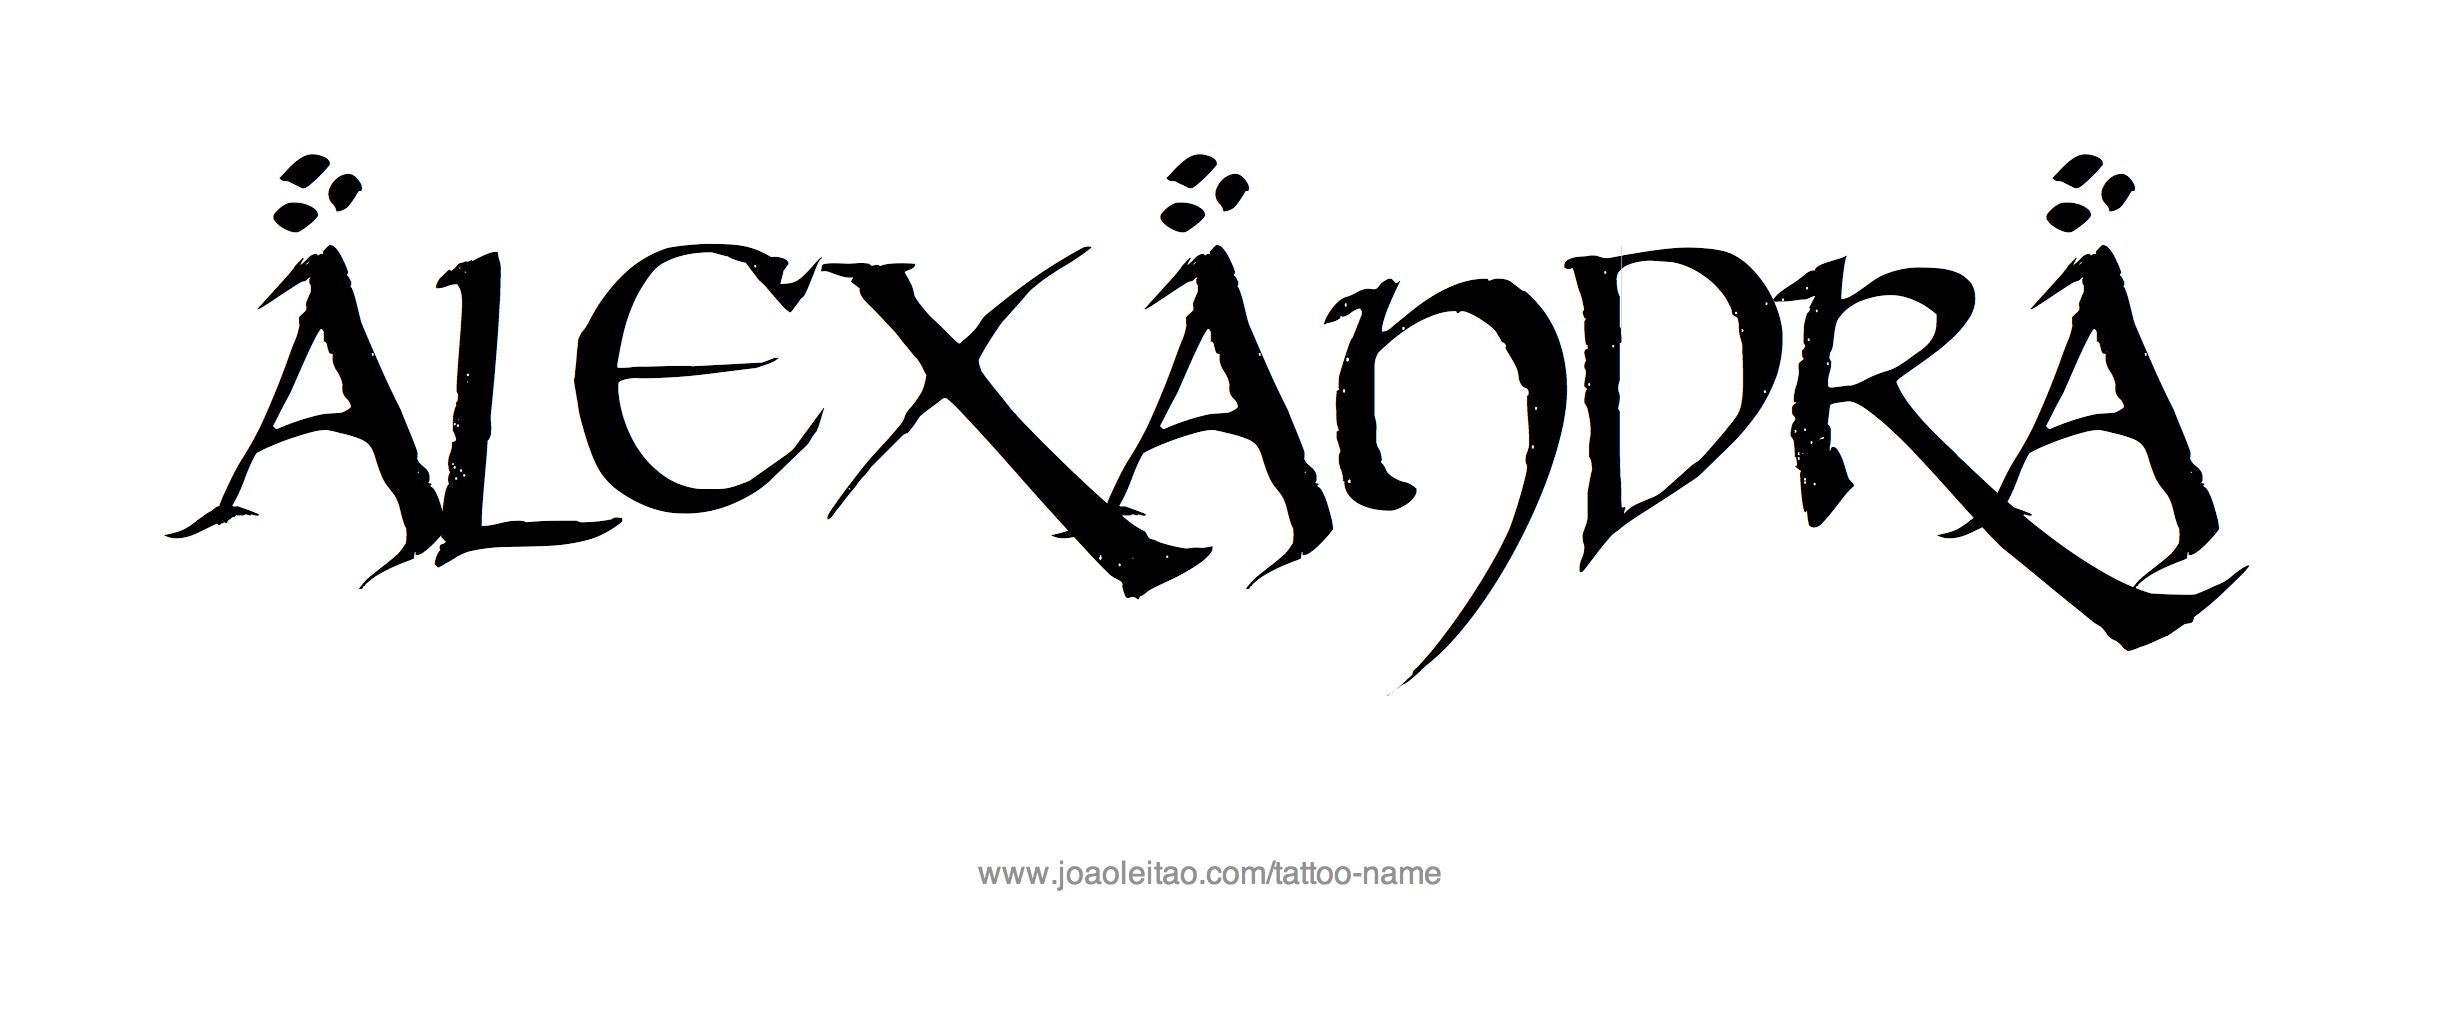 Имя Александра красивым шрифтом